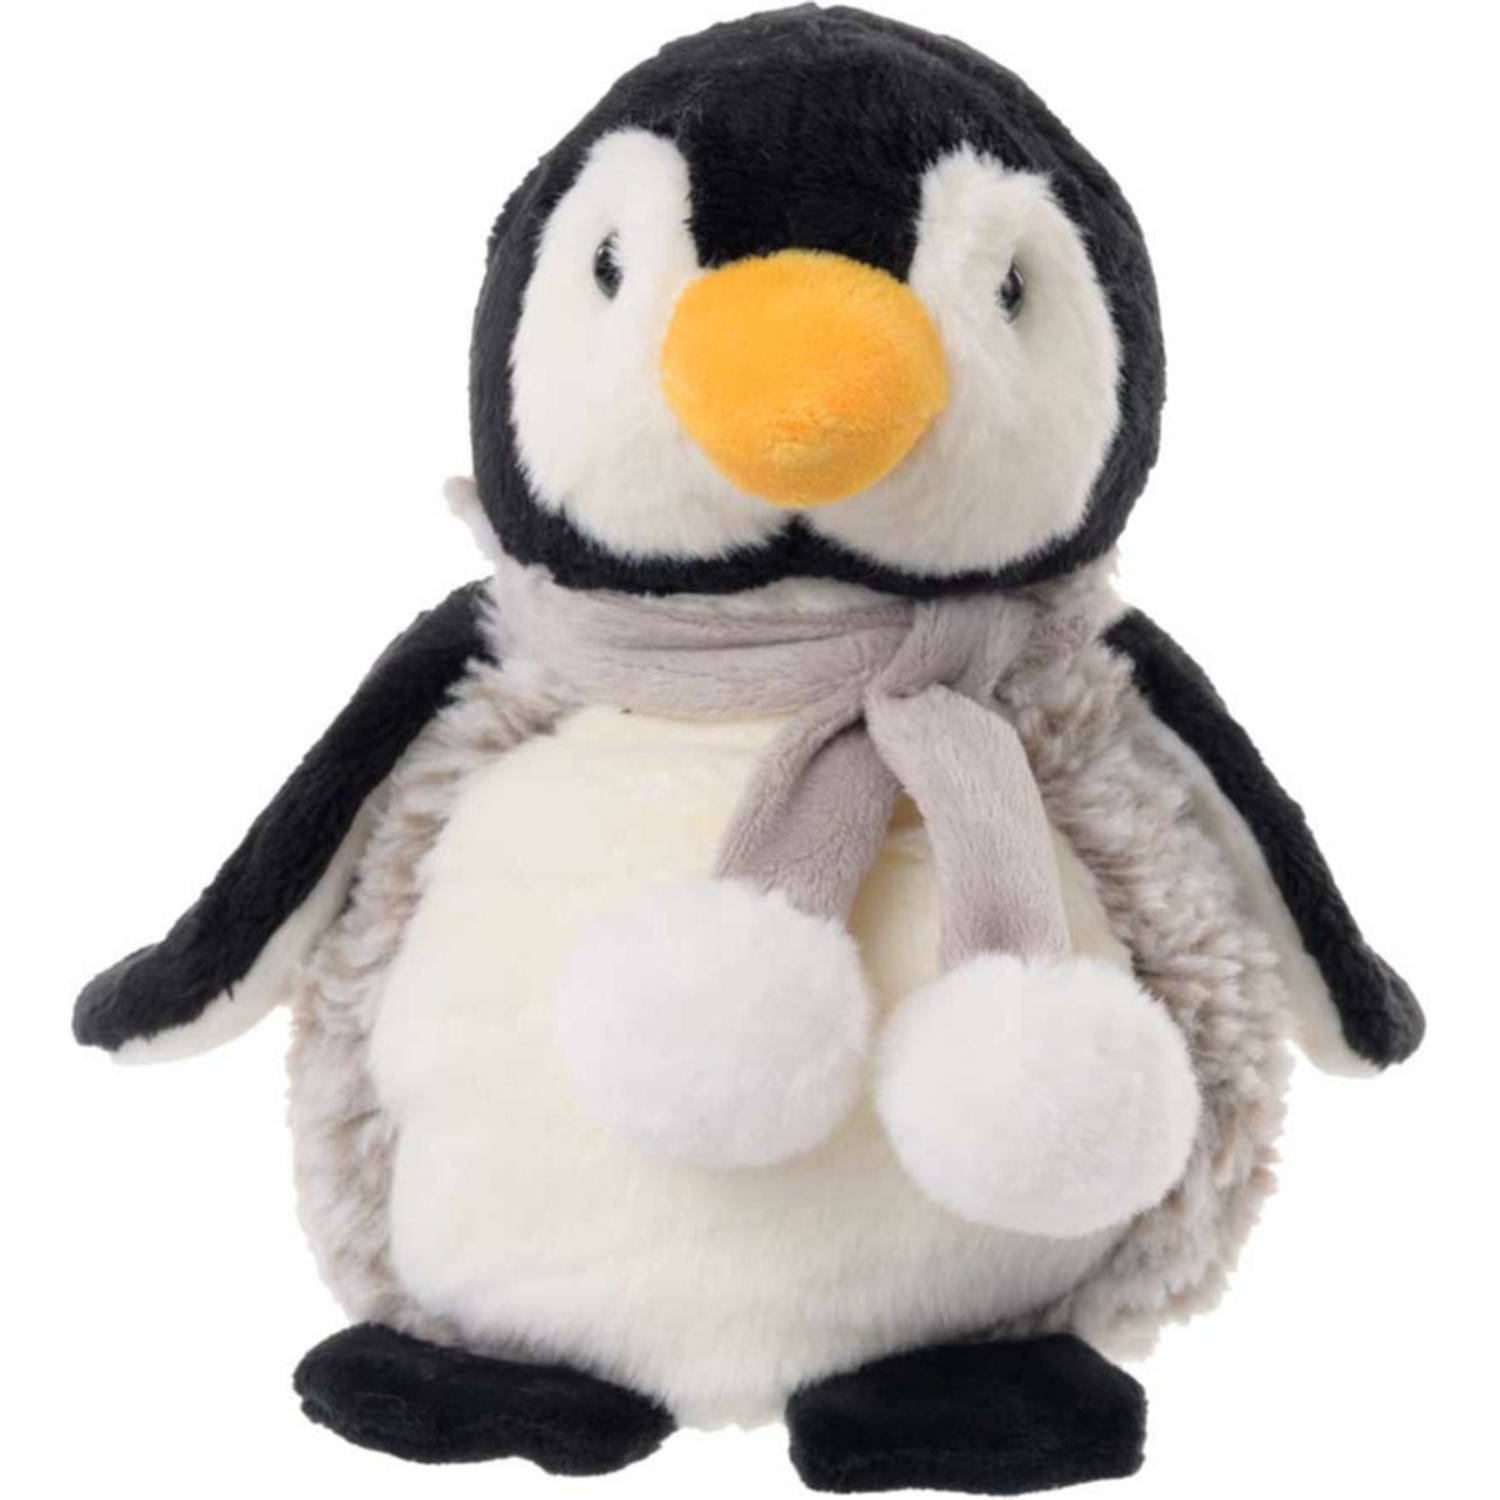 Bukowski pluche pinguin knuffeldier - grijs/wit - staand - 25 cm - Luxe kwaliteit knuffels